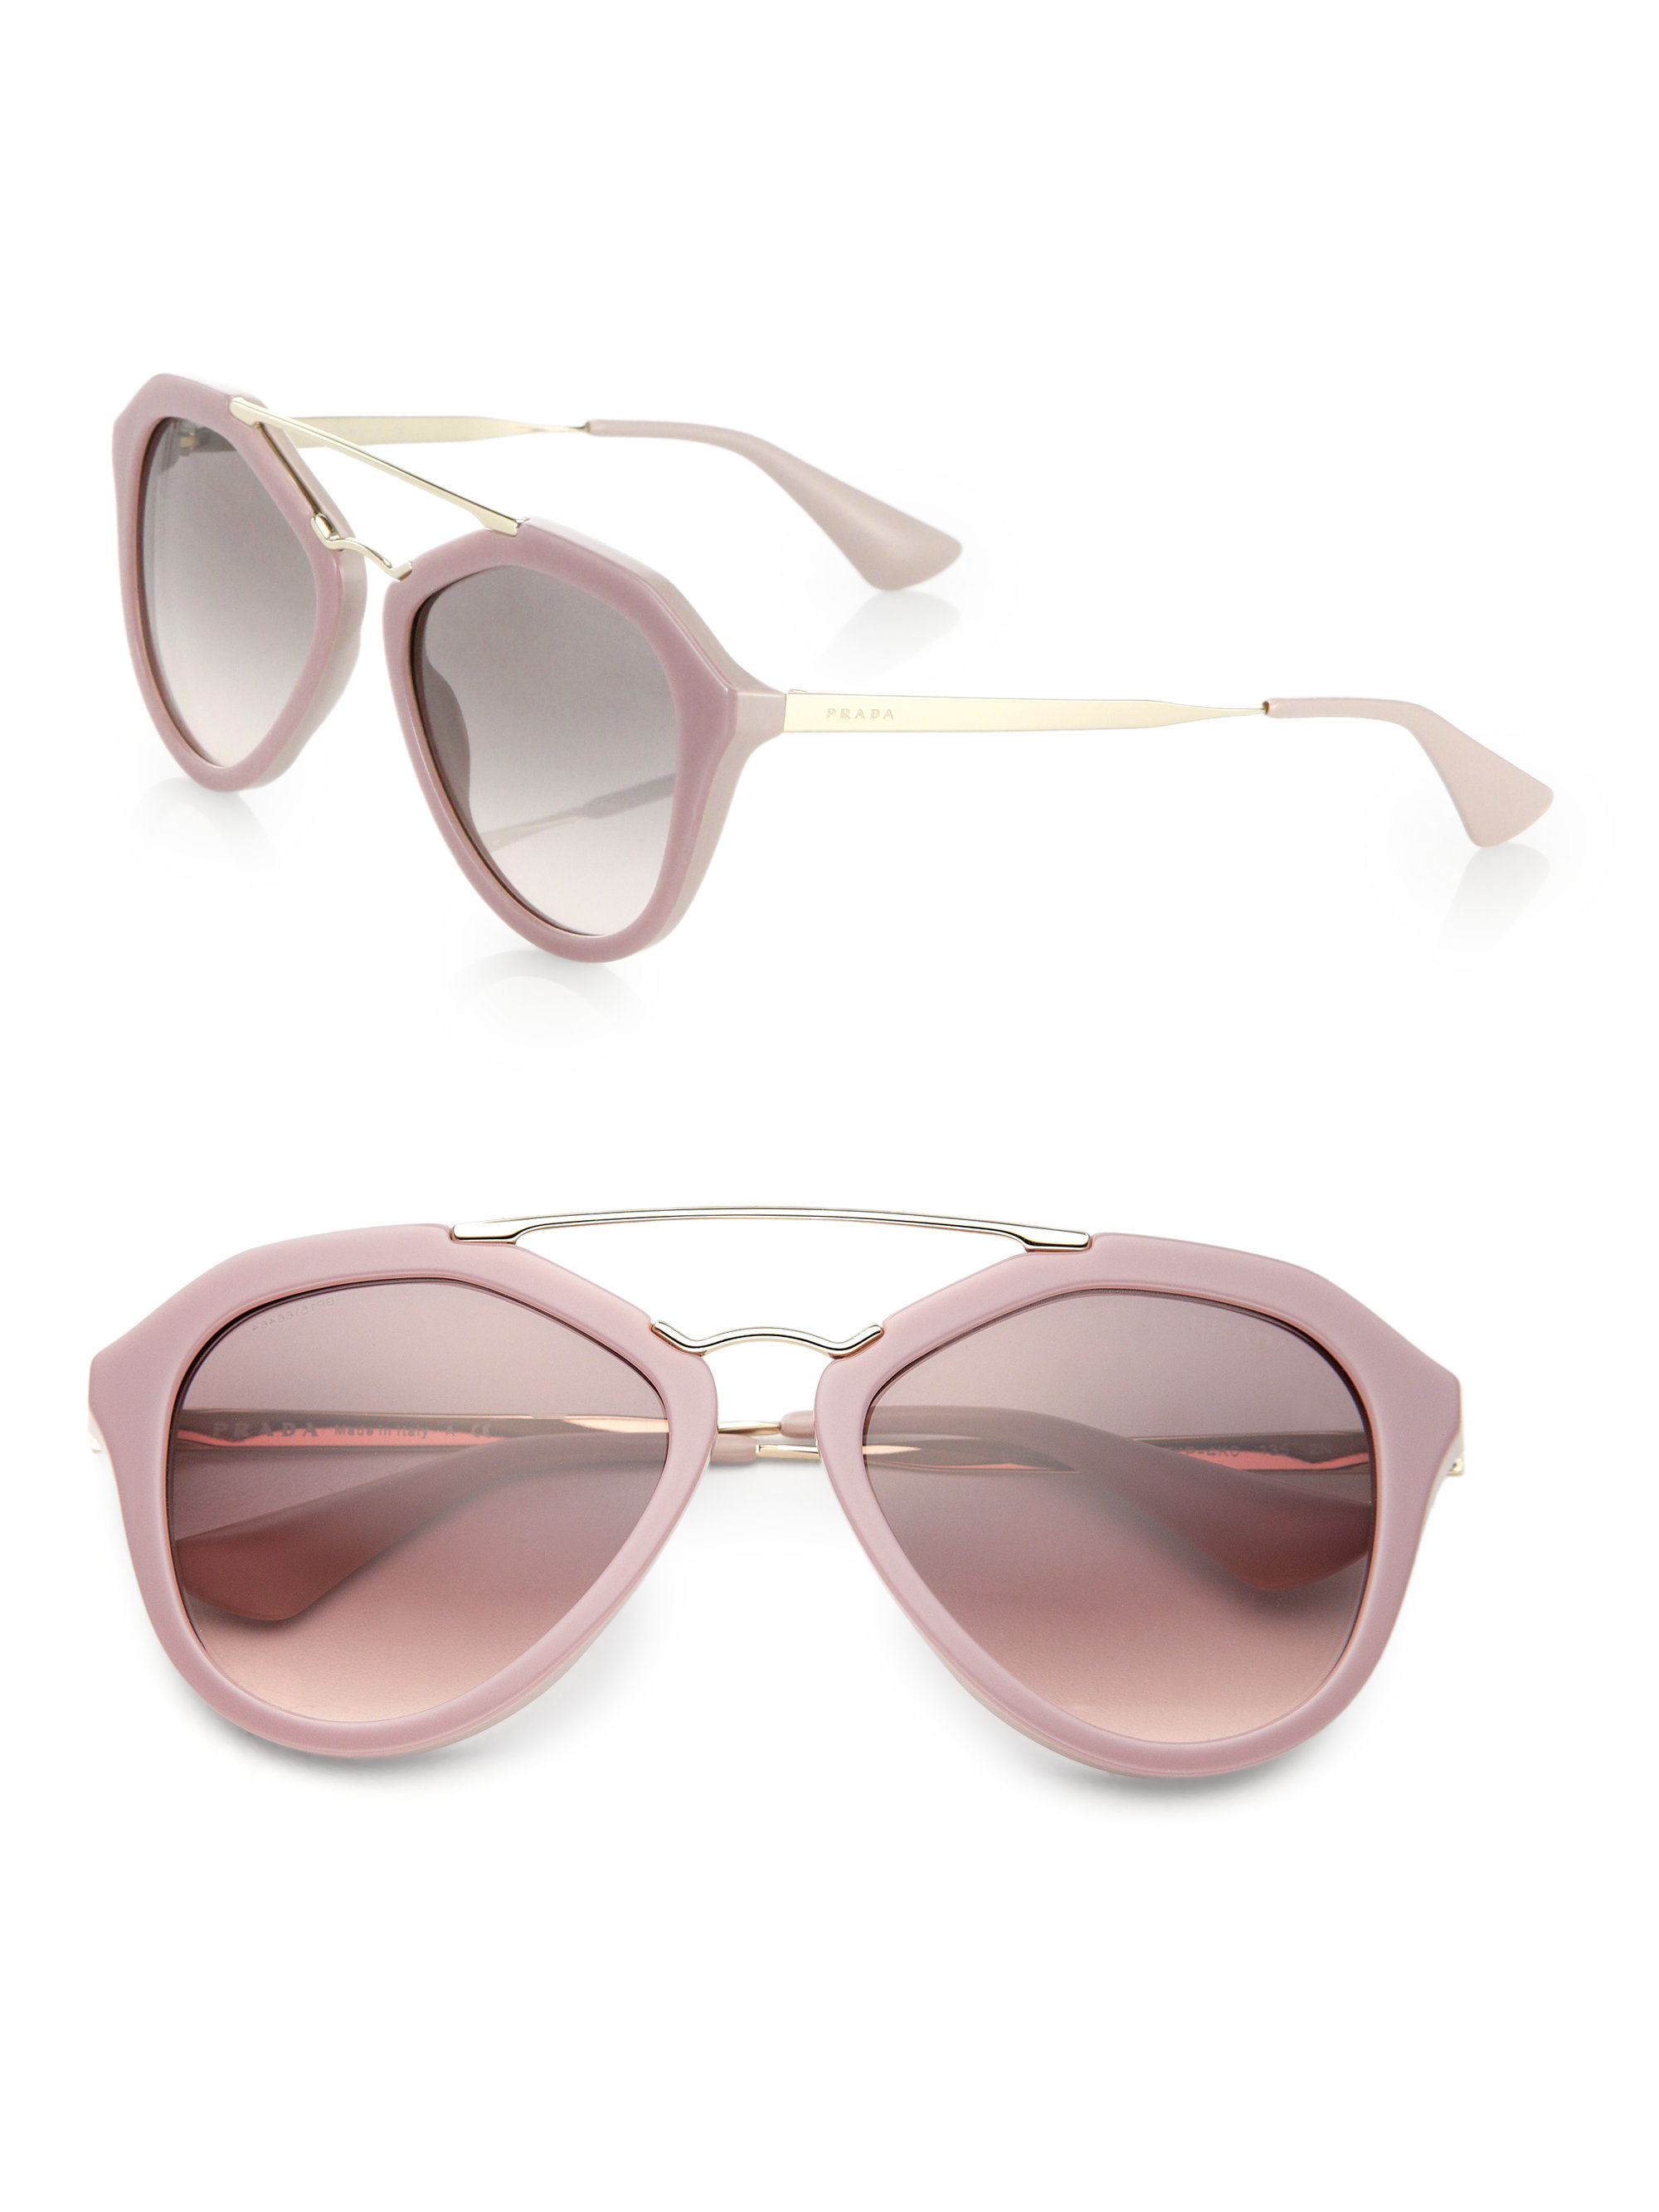 prada sunglasses pink frame